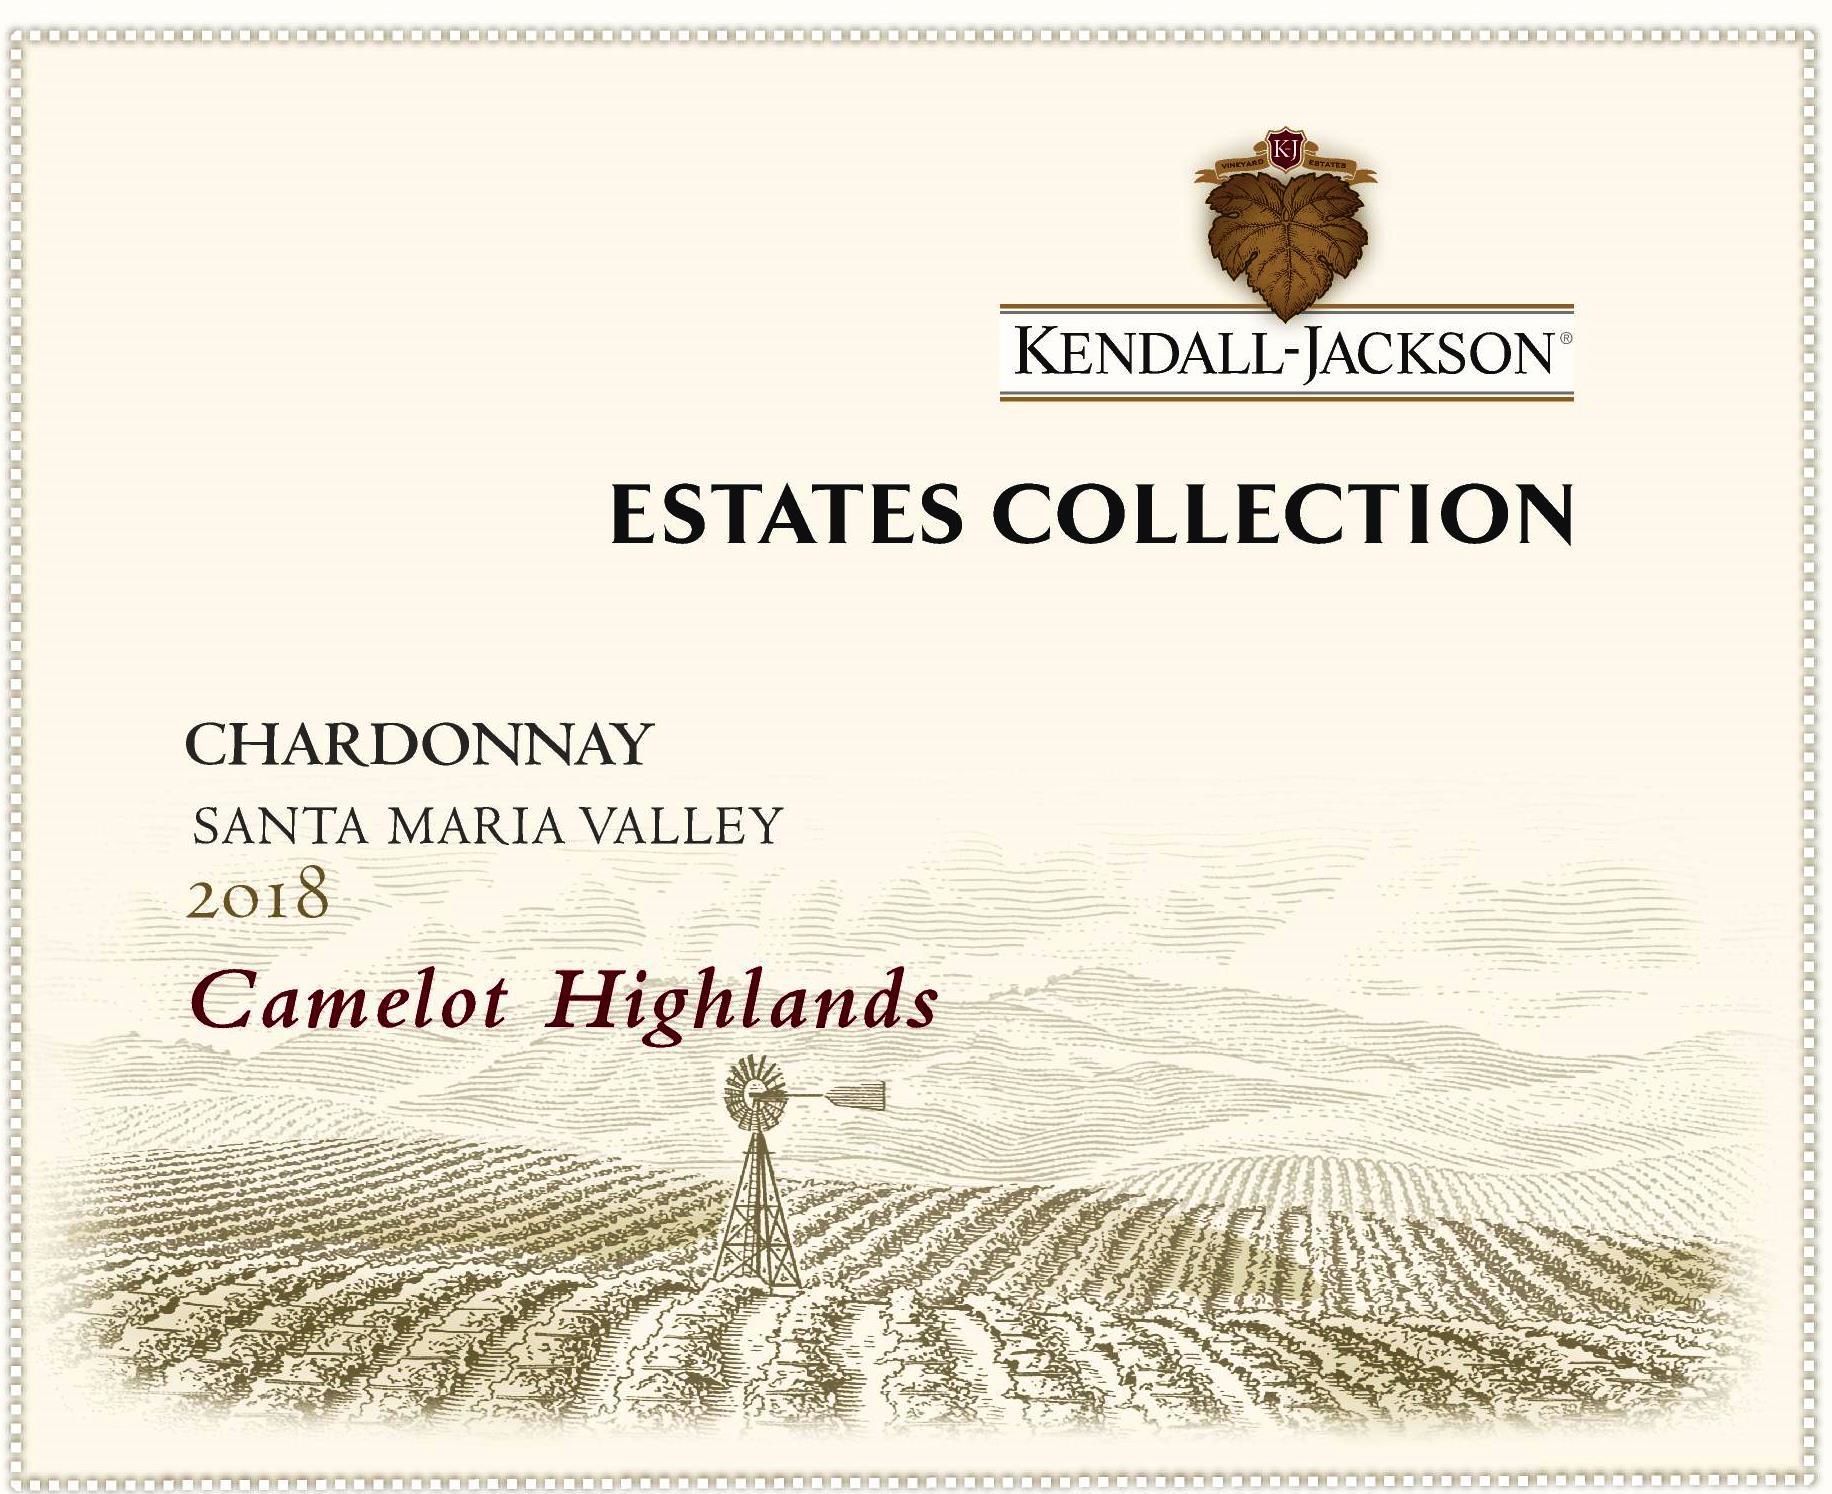 Kendall-Jackson Jackson Estate Camelot Highlands Chardonnay 2018